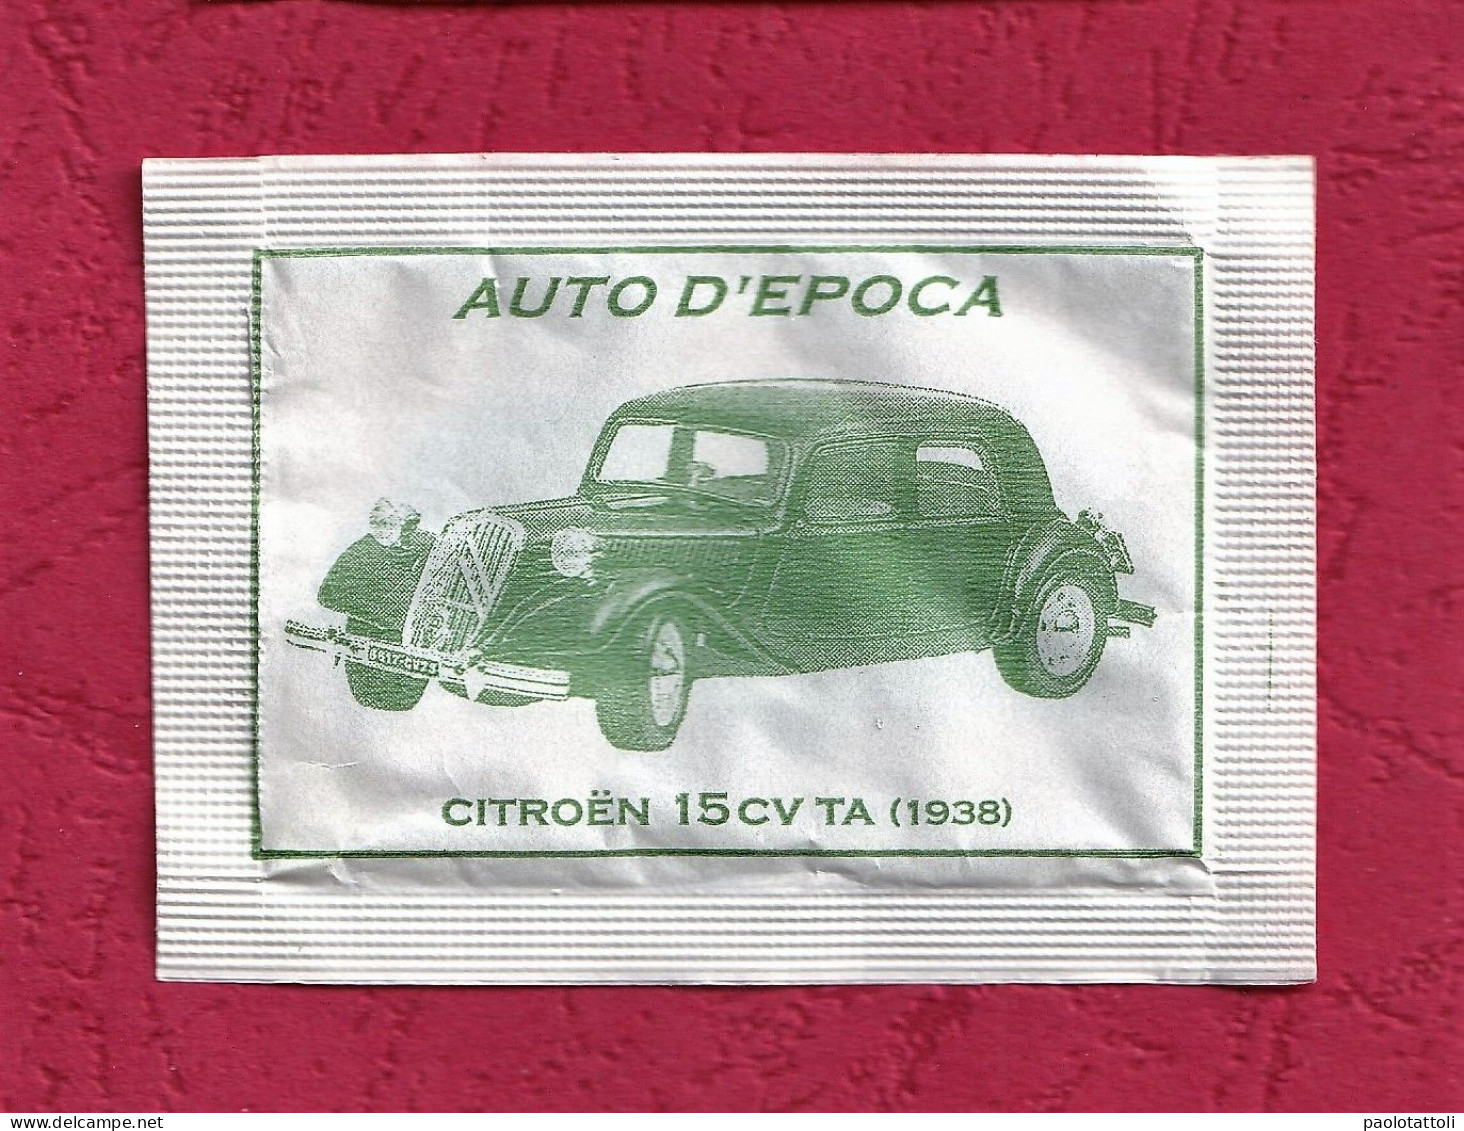 Bustina Vuota Zucchero. Empty Sugar Bag- Cars. Auto D'epoca, Citroen 15 Cv TA-1938. Packed By Pubblisugar, Andria. BA. - Suiker